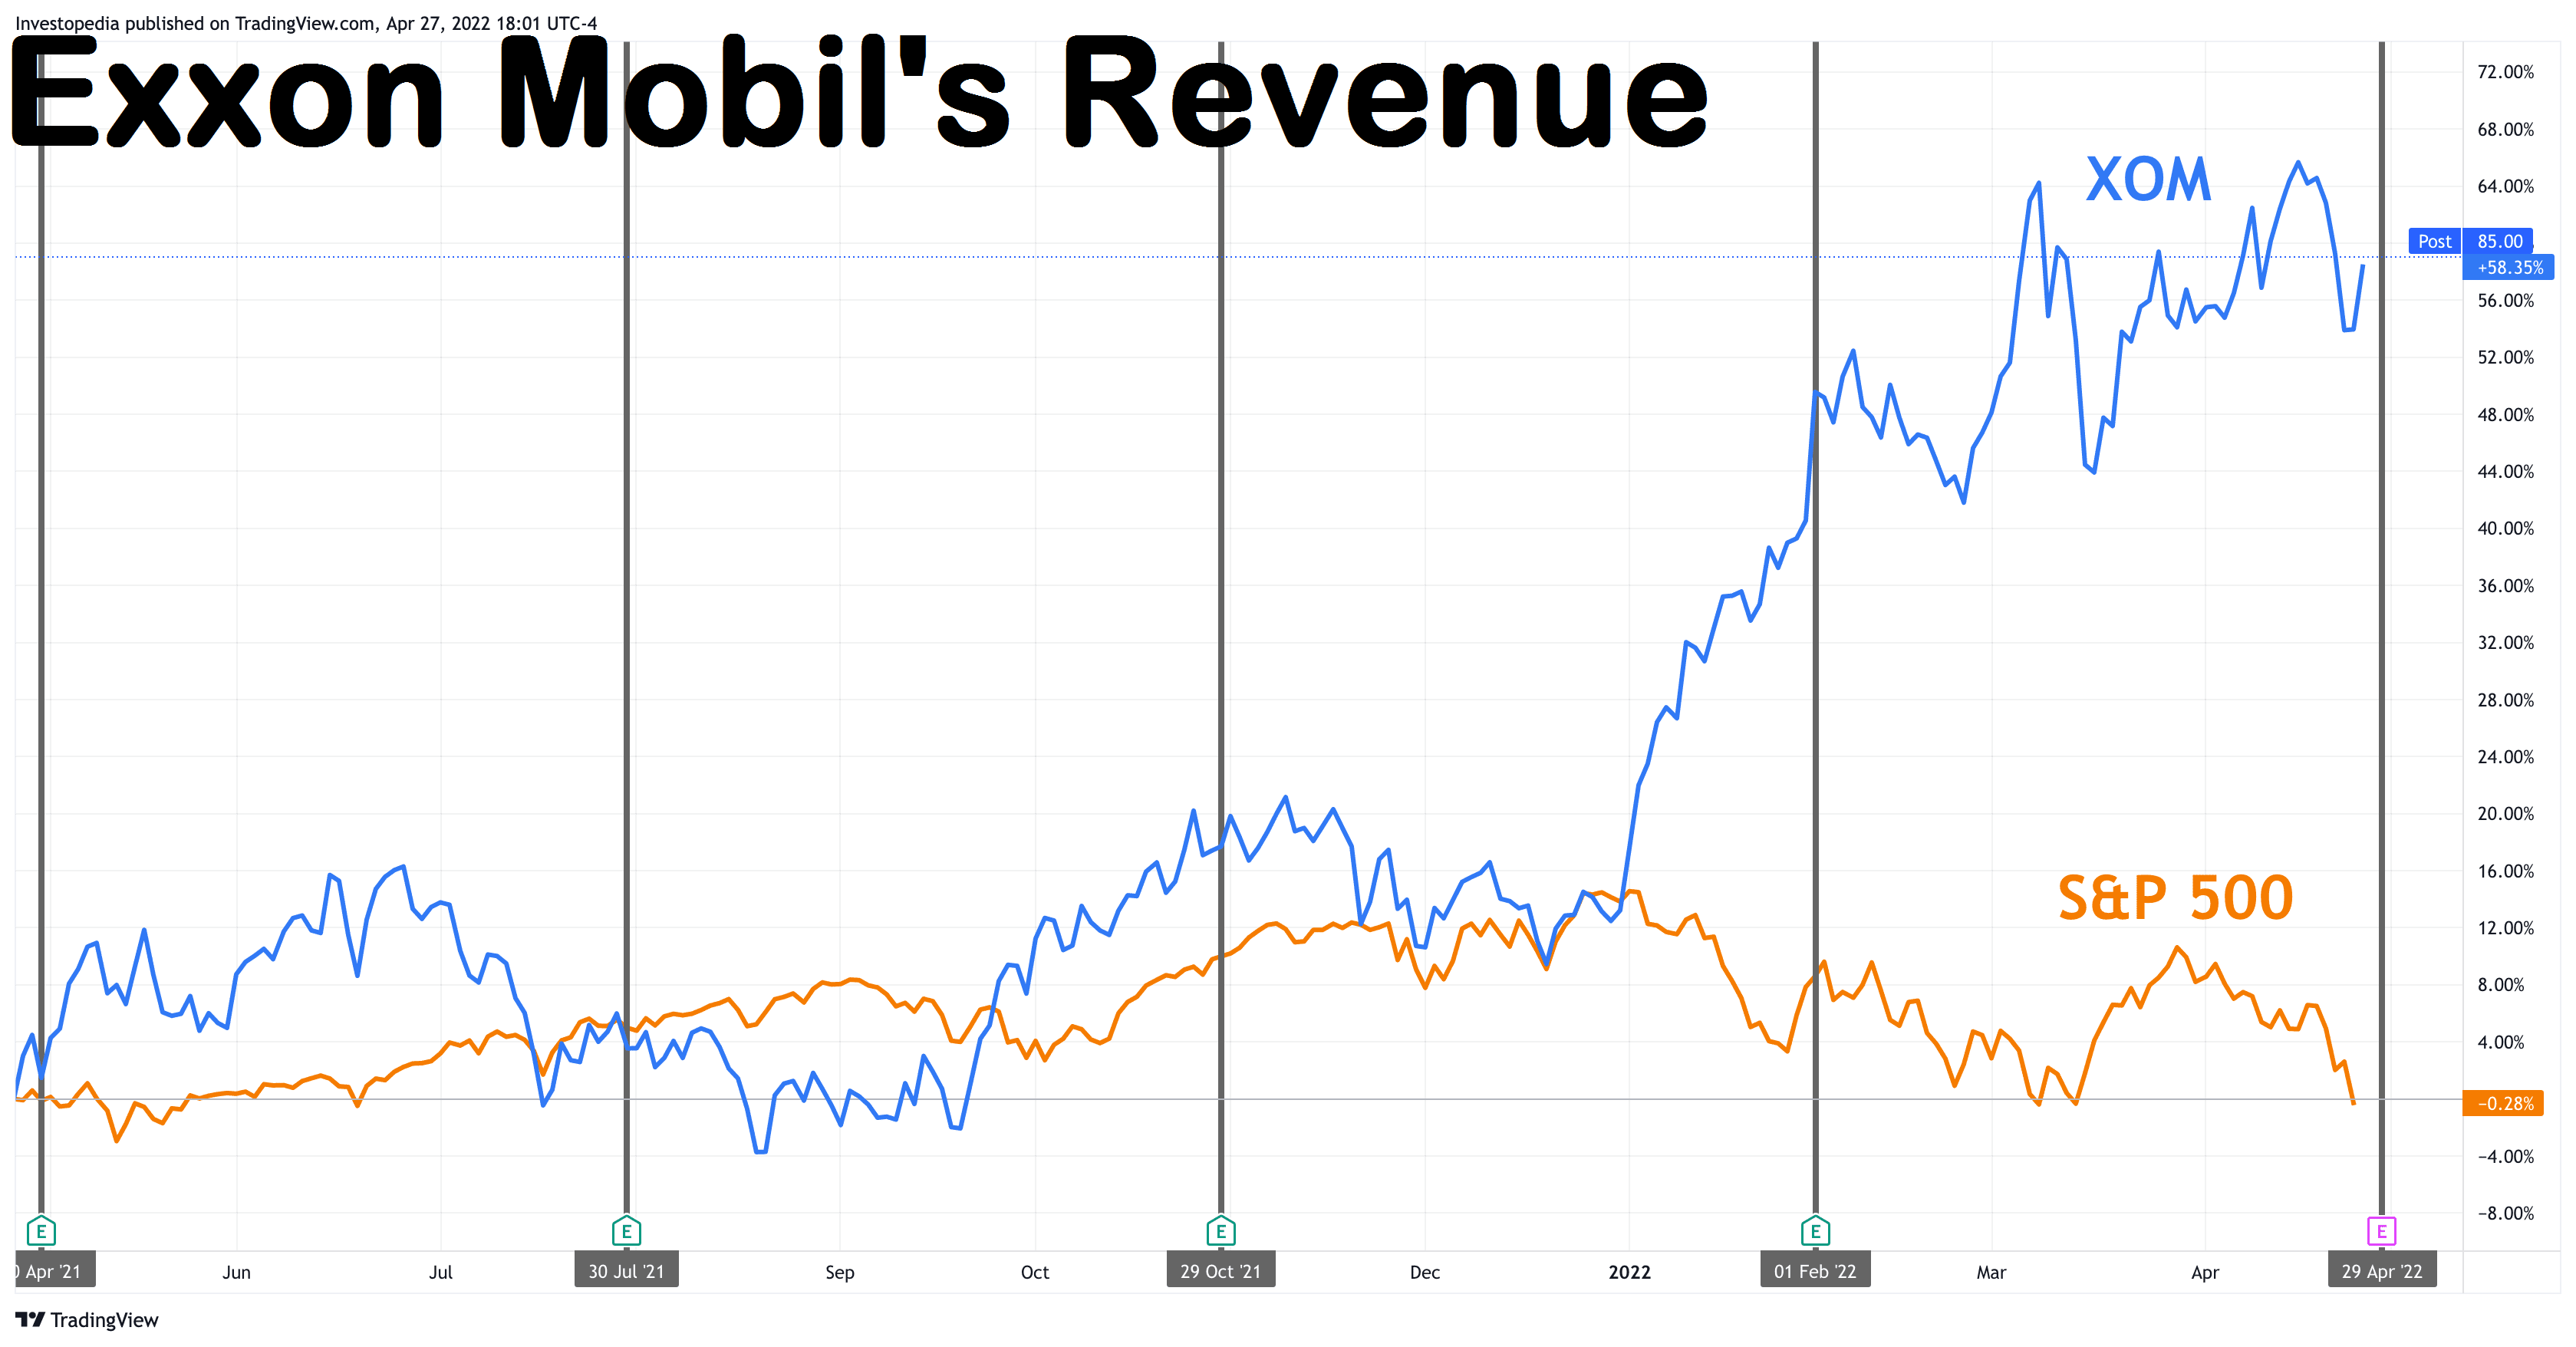 Exxon Mobil's Revenue